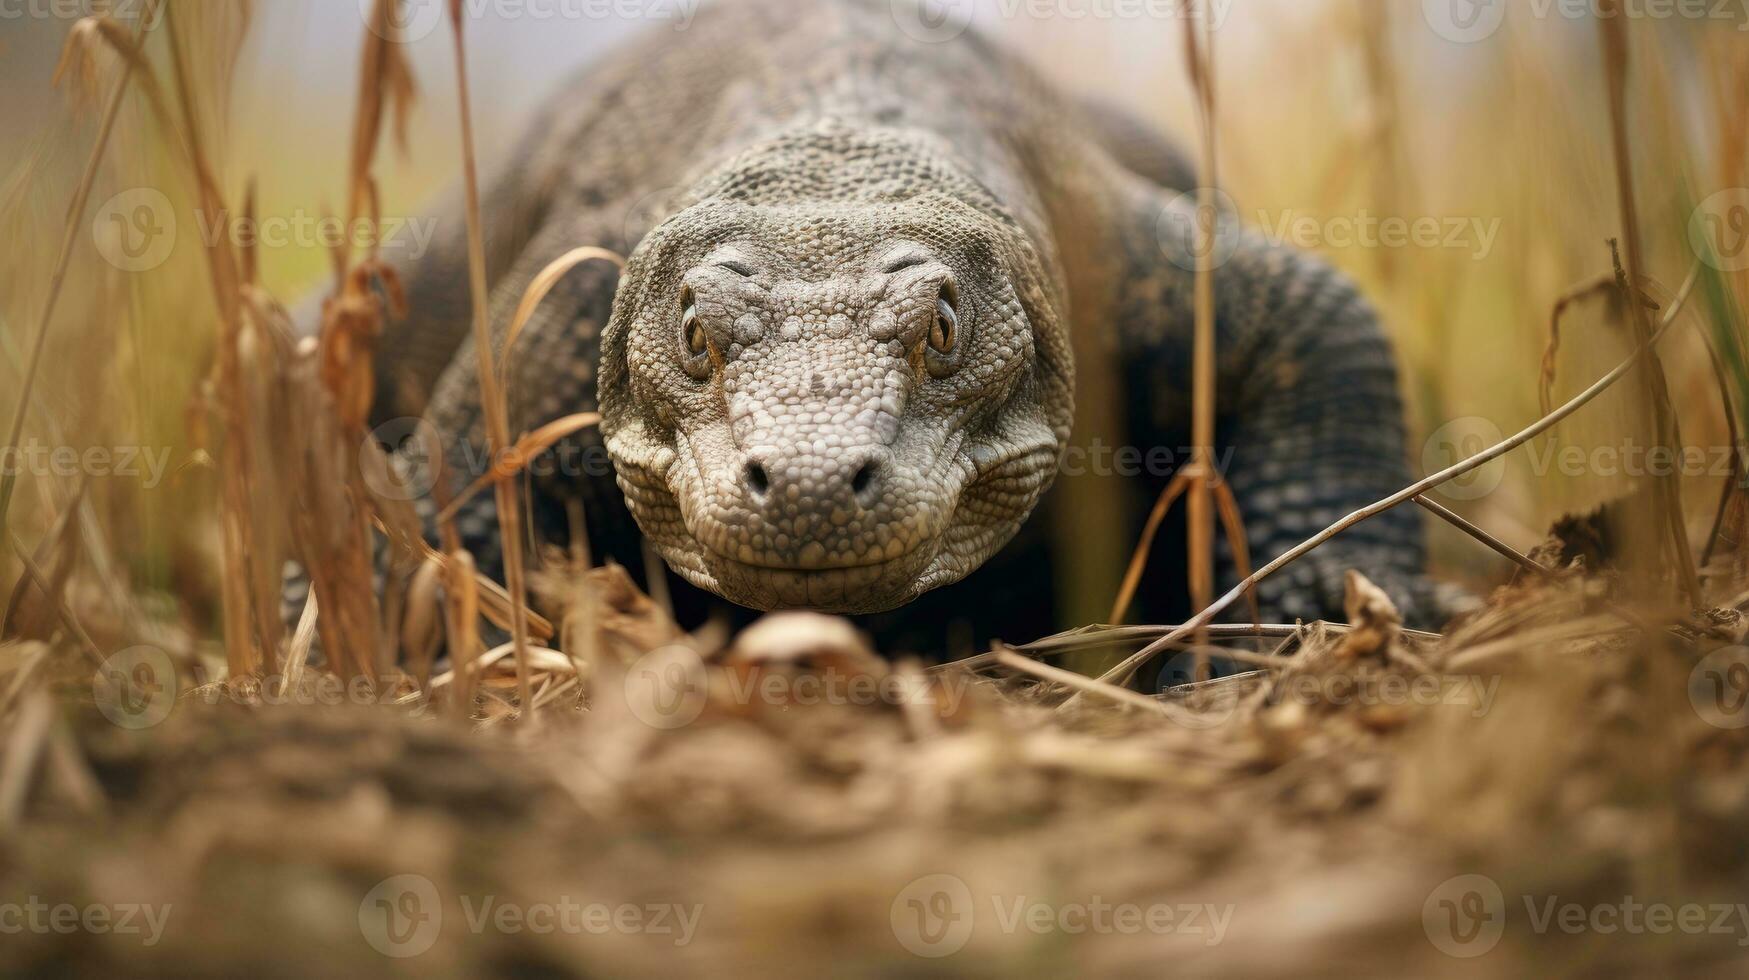 Komodo dragon hidden predator photography grass national geographic style documentary wallpaper photo